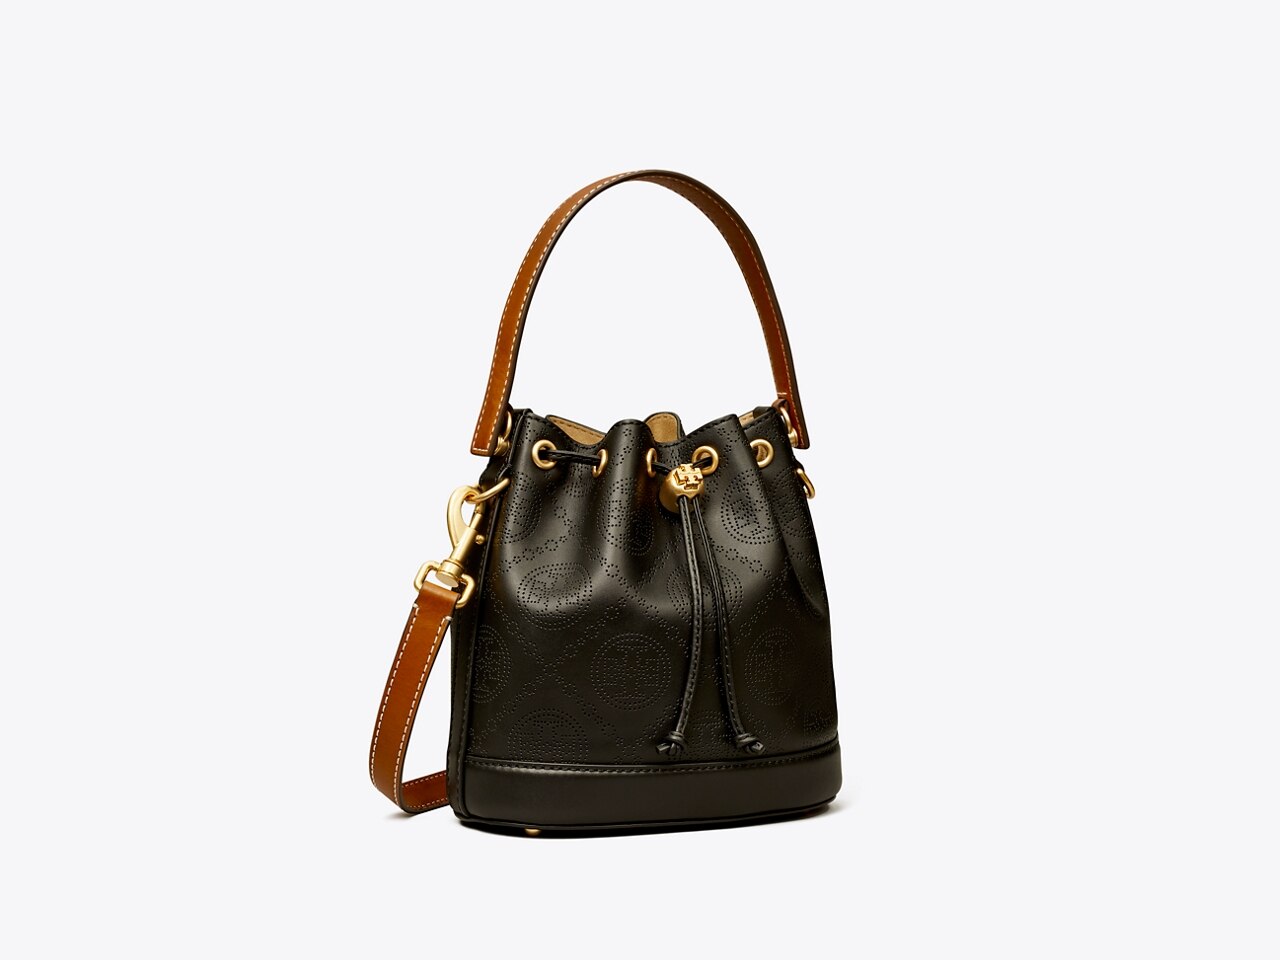 T Monogram Perforated Bucket Bag: Women's Handbags, Crossbody Bags